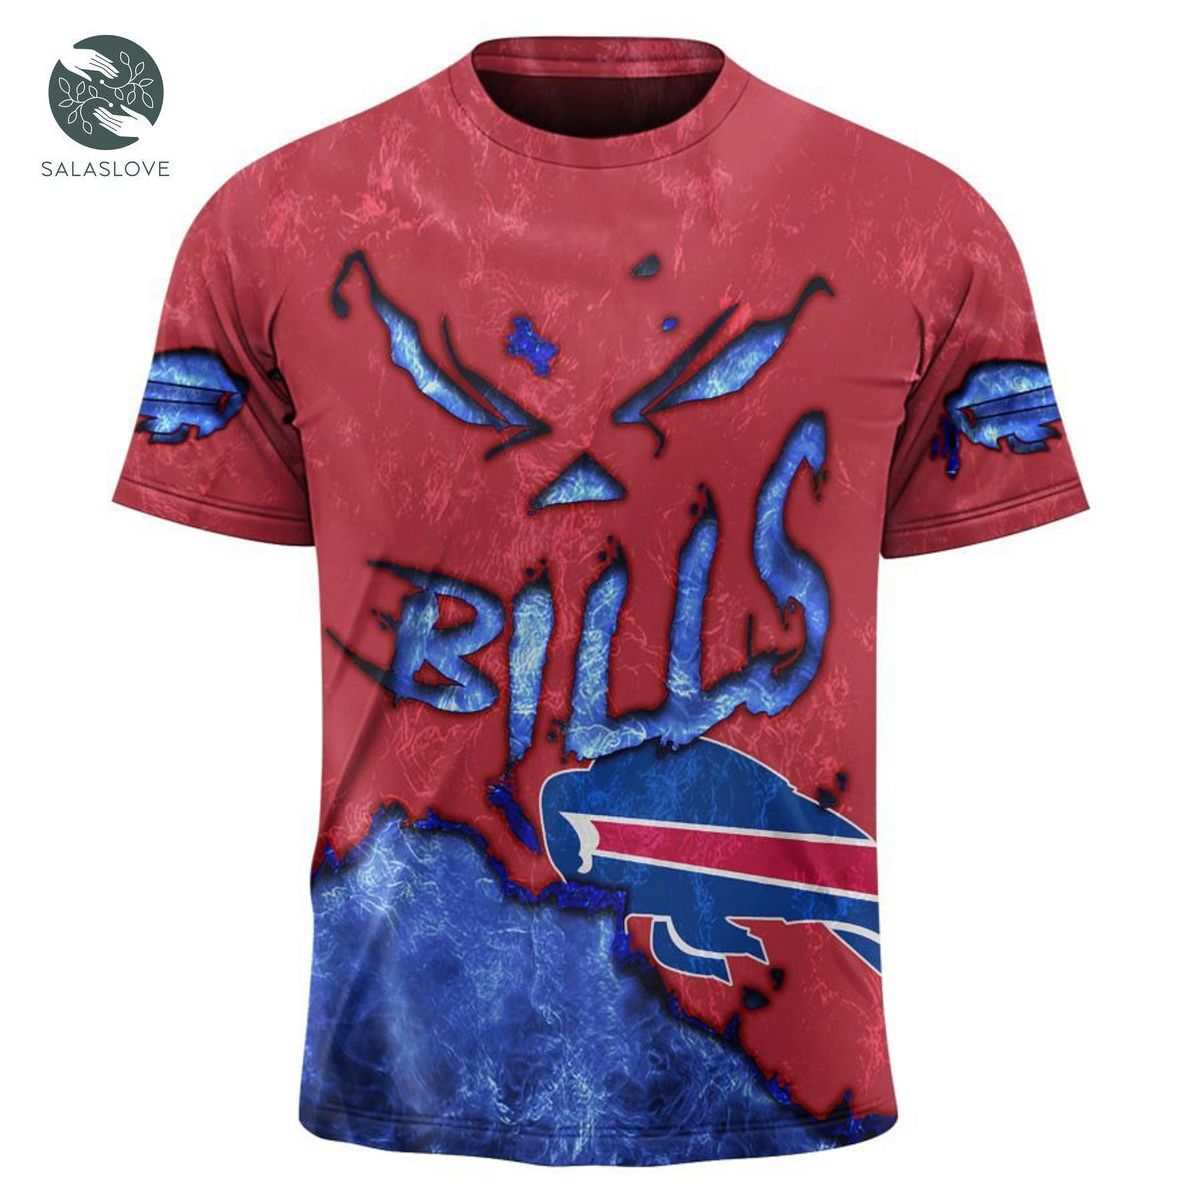 Buffalo Bills T-shirt 3D devil eyes gift for fans